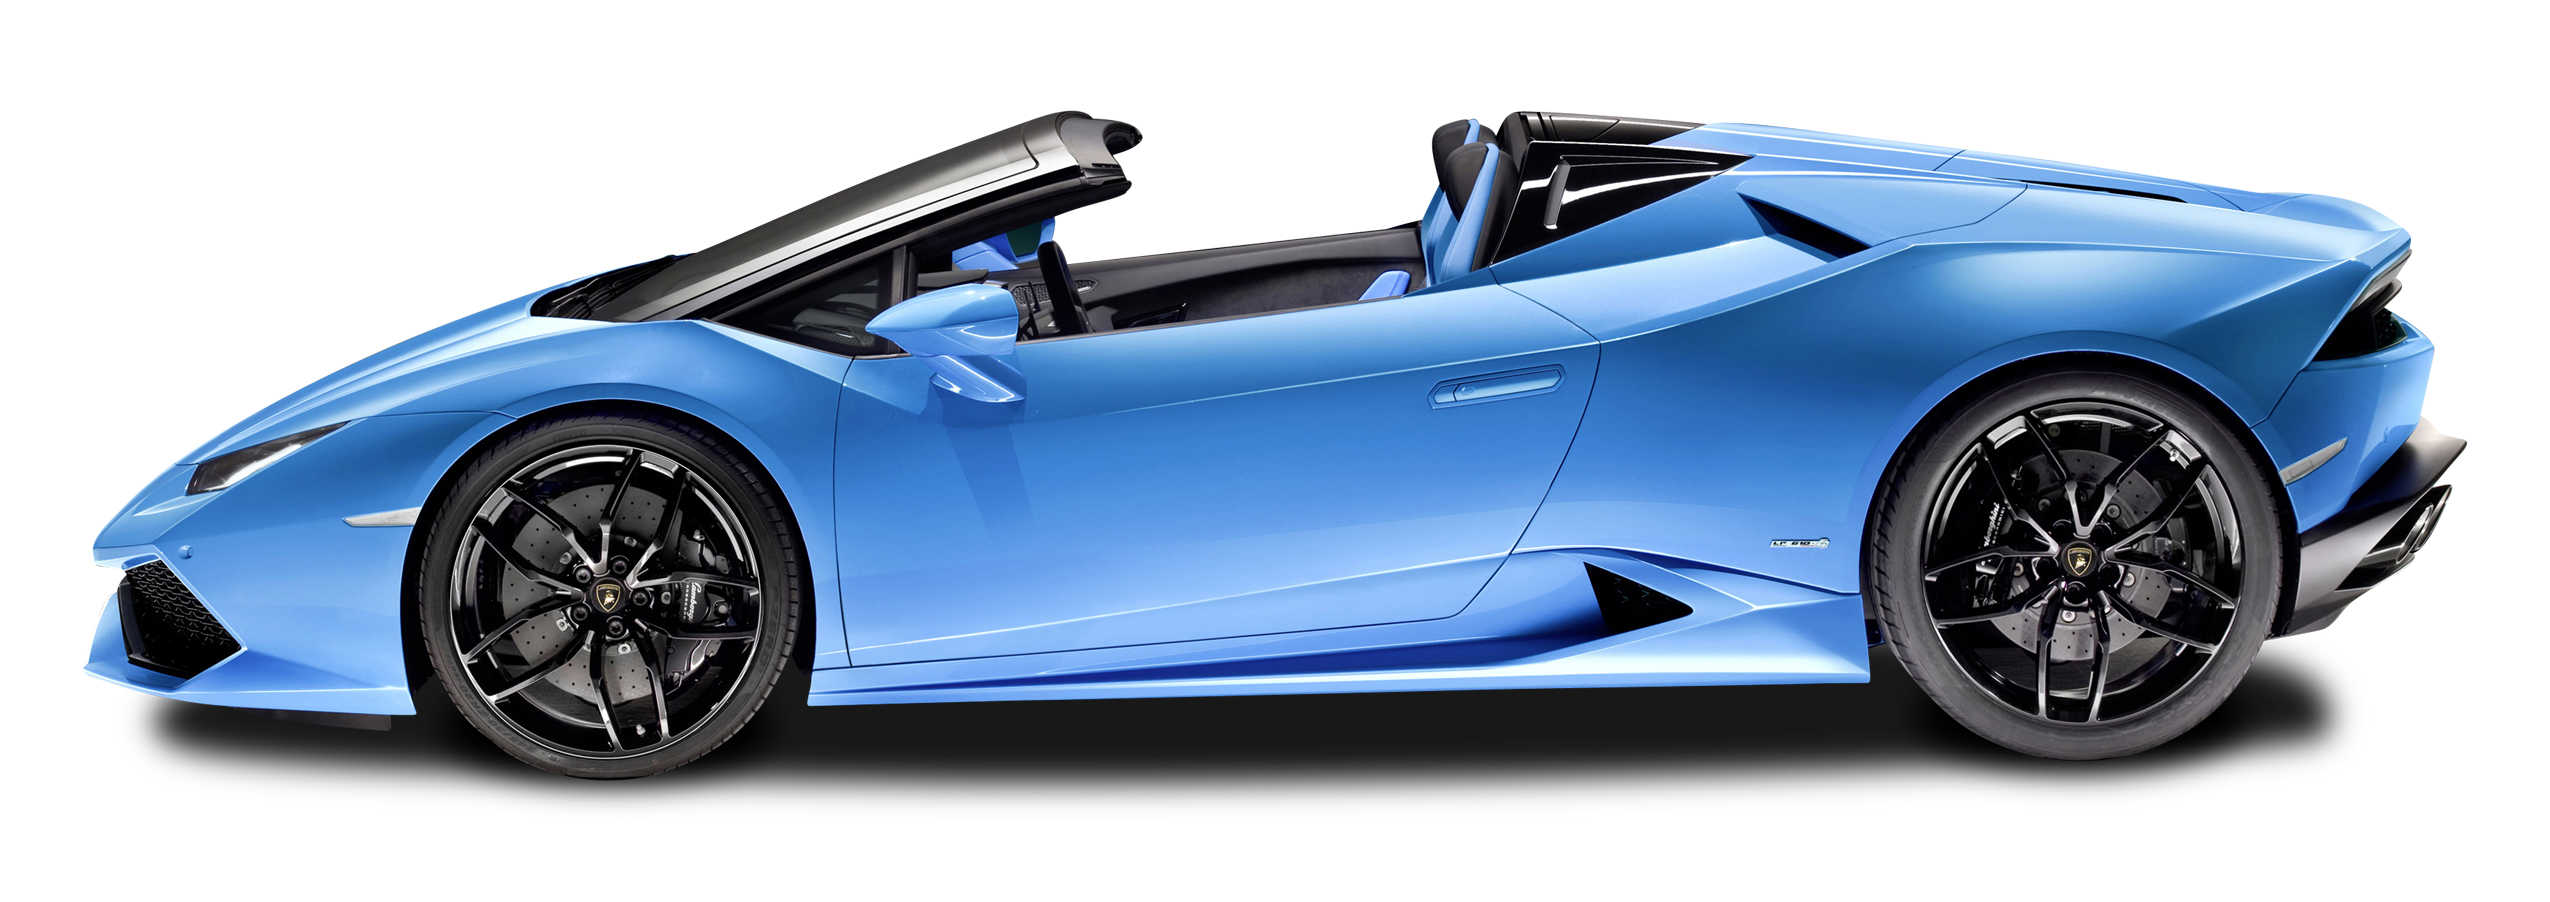 Blue Lamborghini Transparent Image